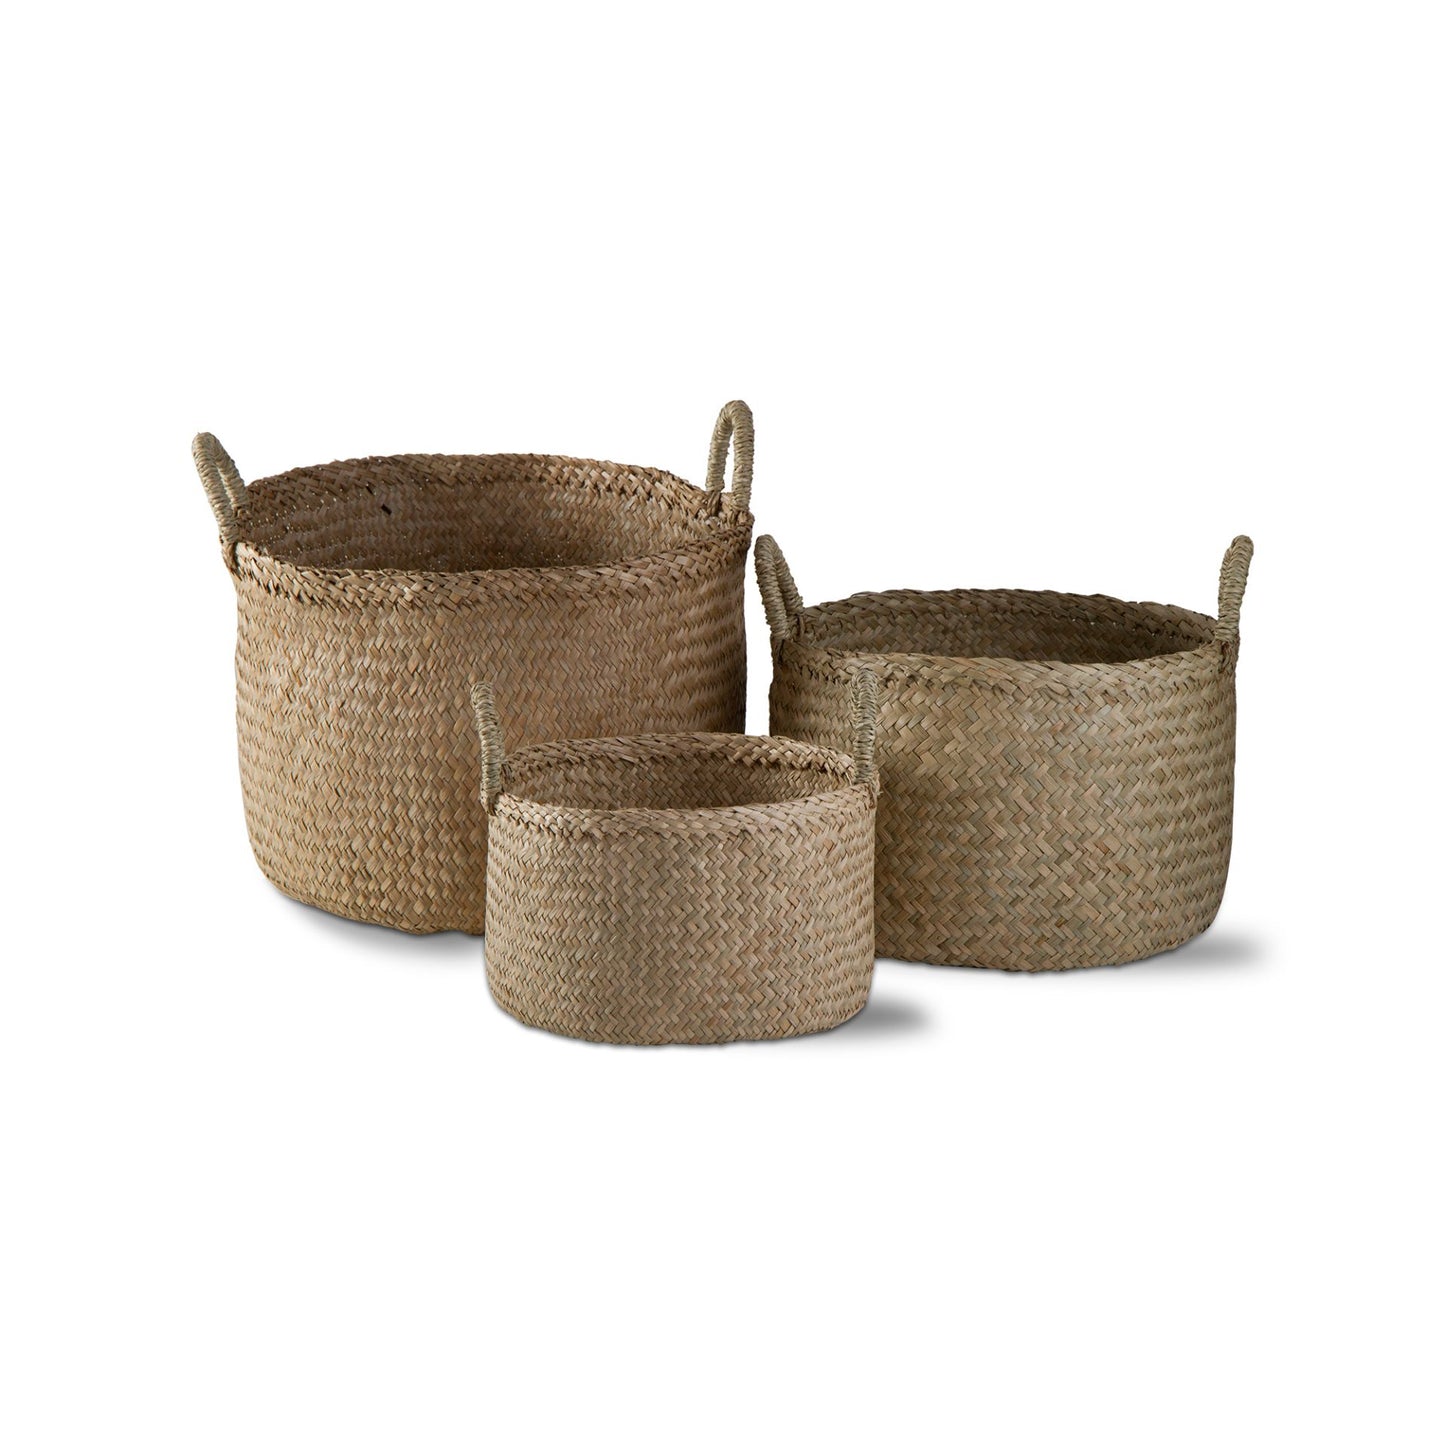 Island Seagrass Handle Basket